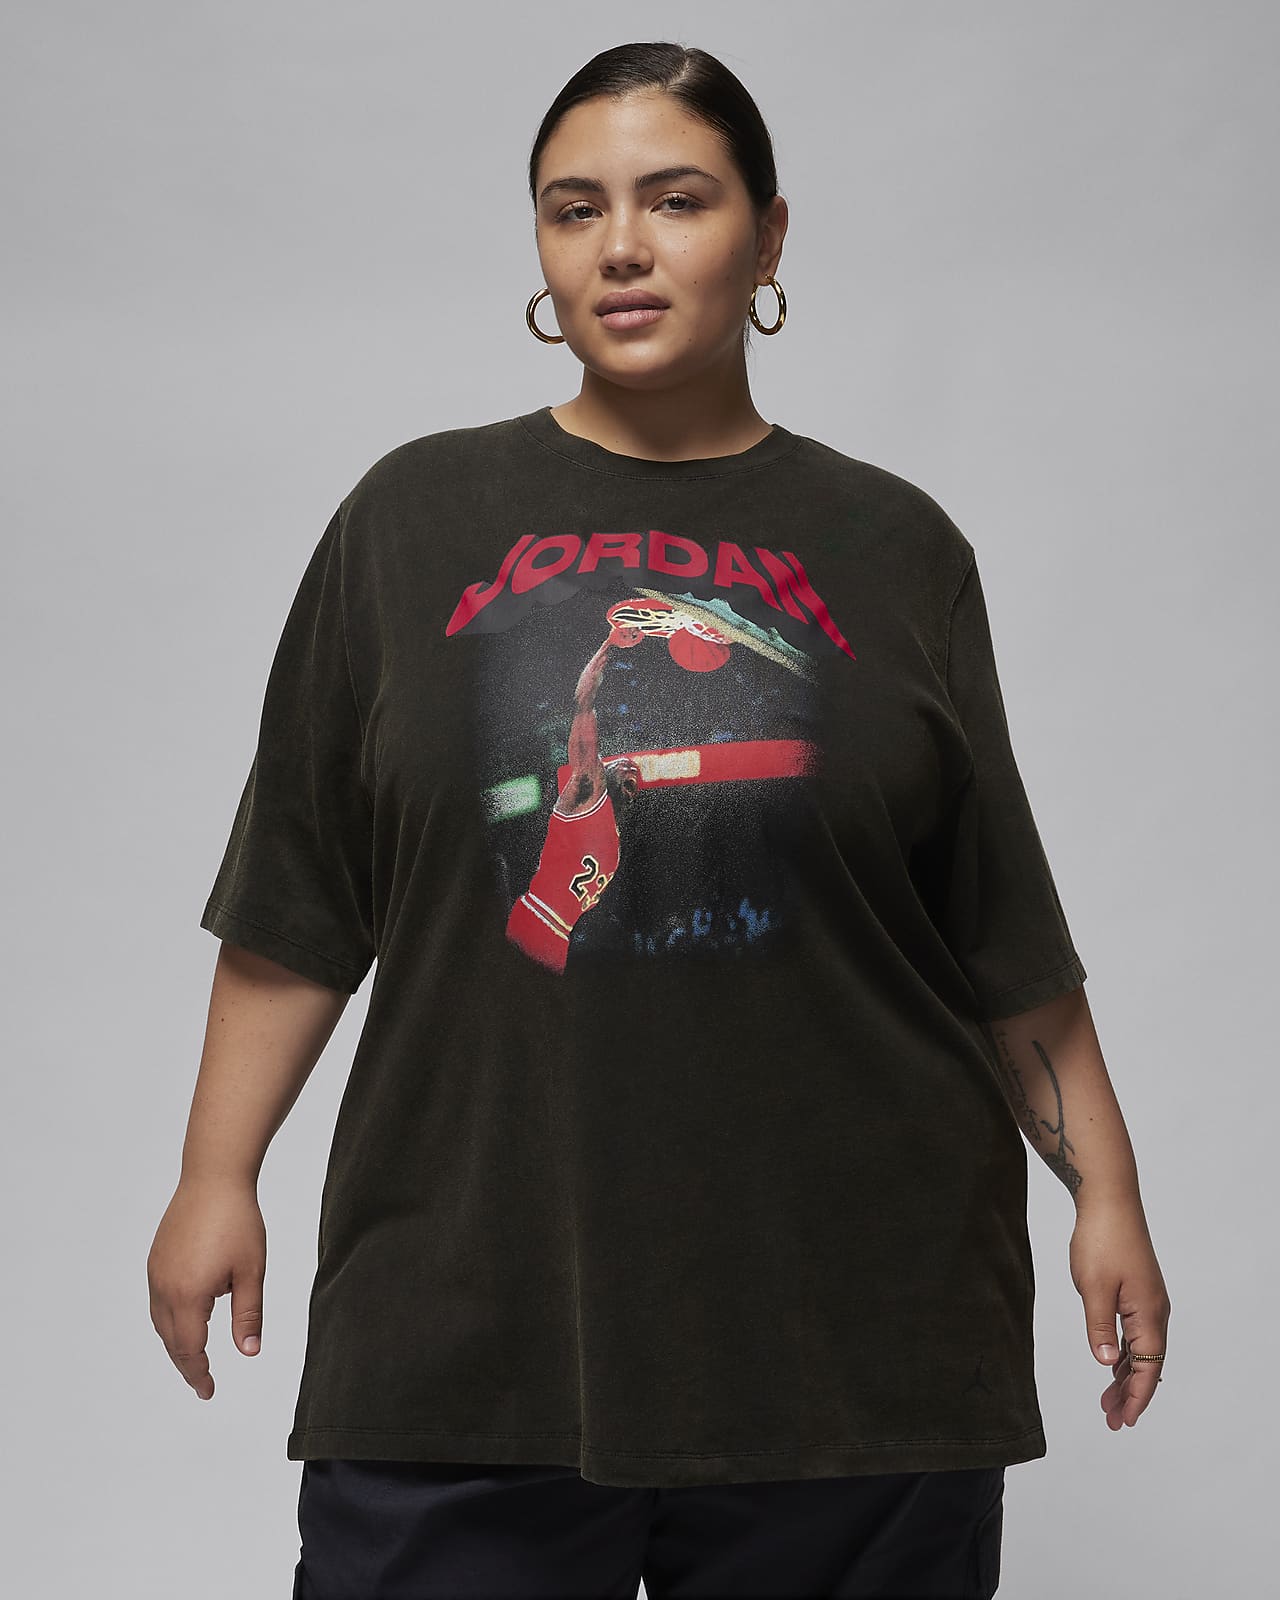 Jordan (Her)itage Women's Graphic T-Shirt (Plus Size).